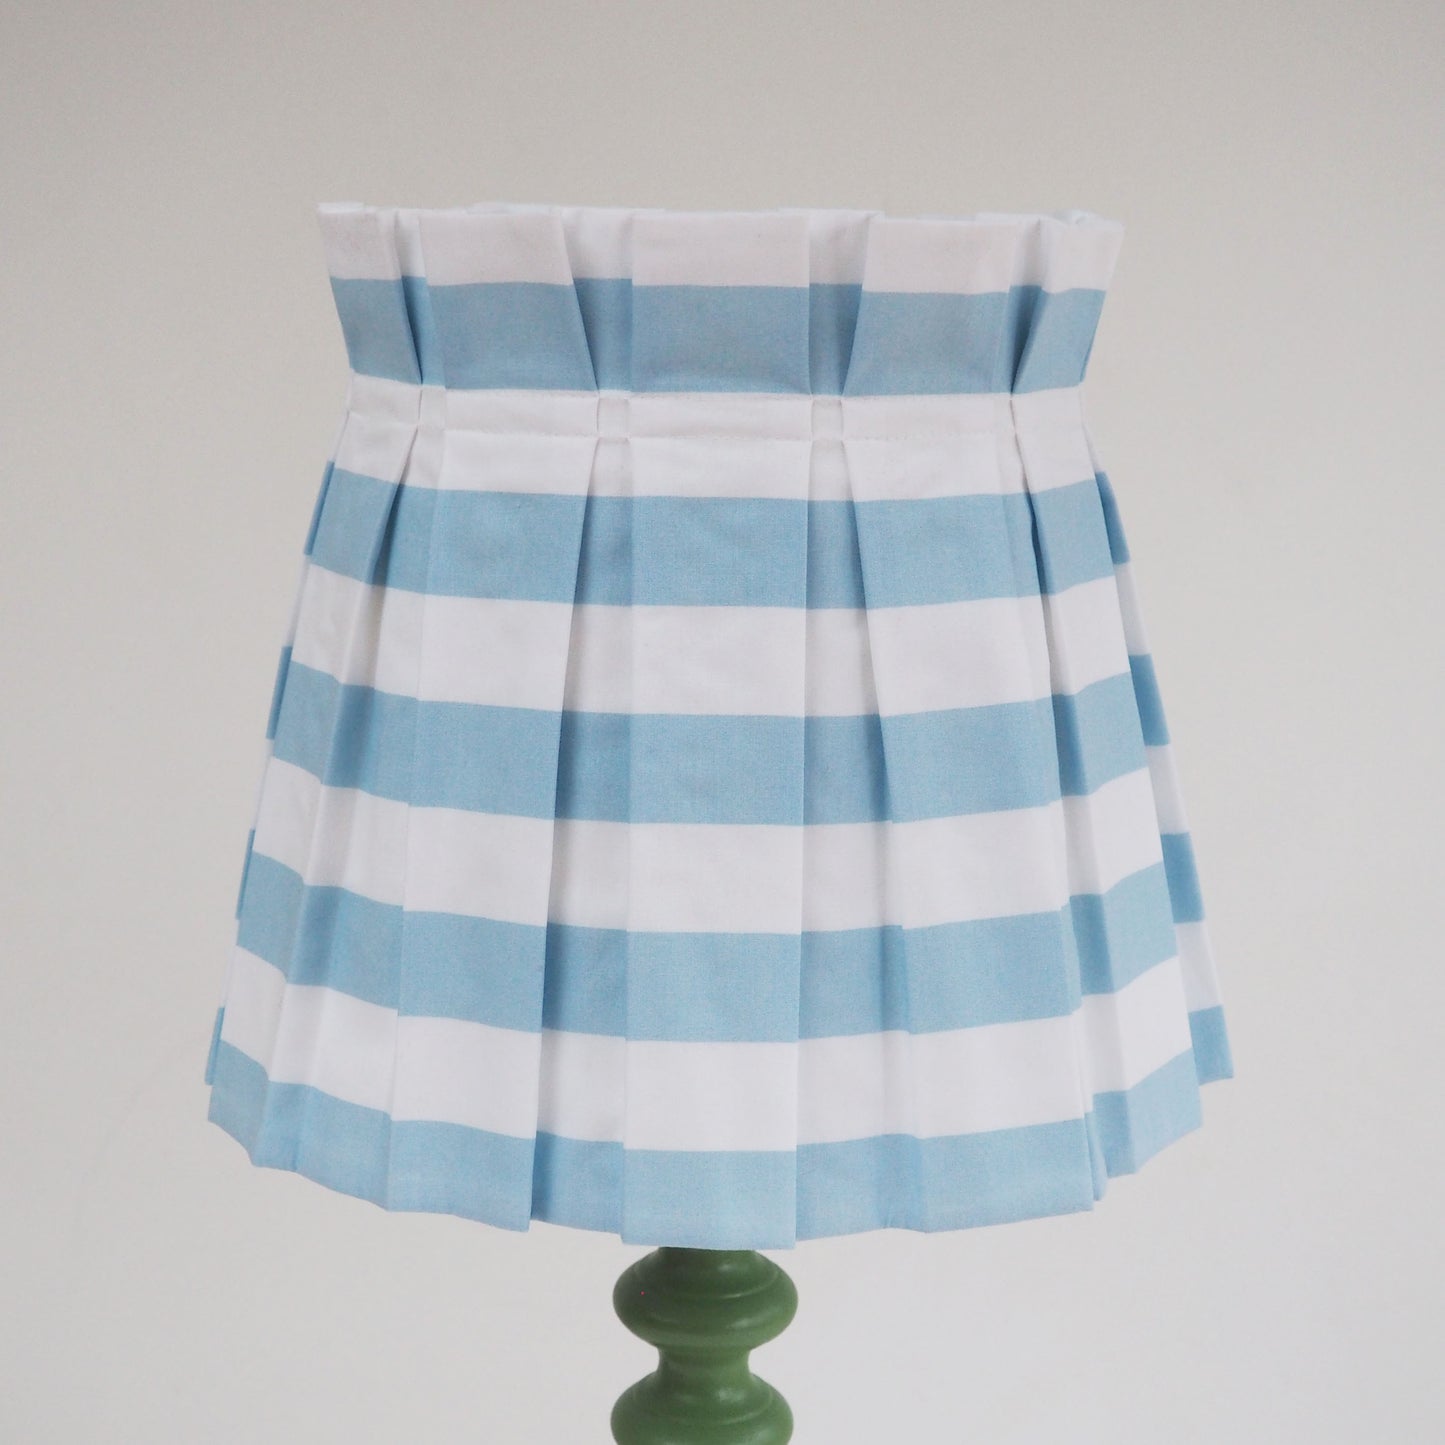 MEDIUM box sky blue and white stripe fabric lampshade